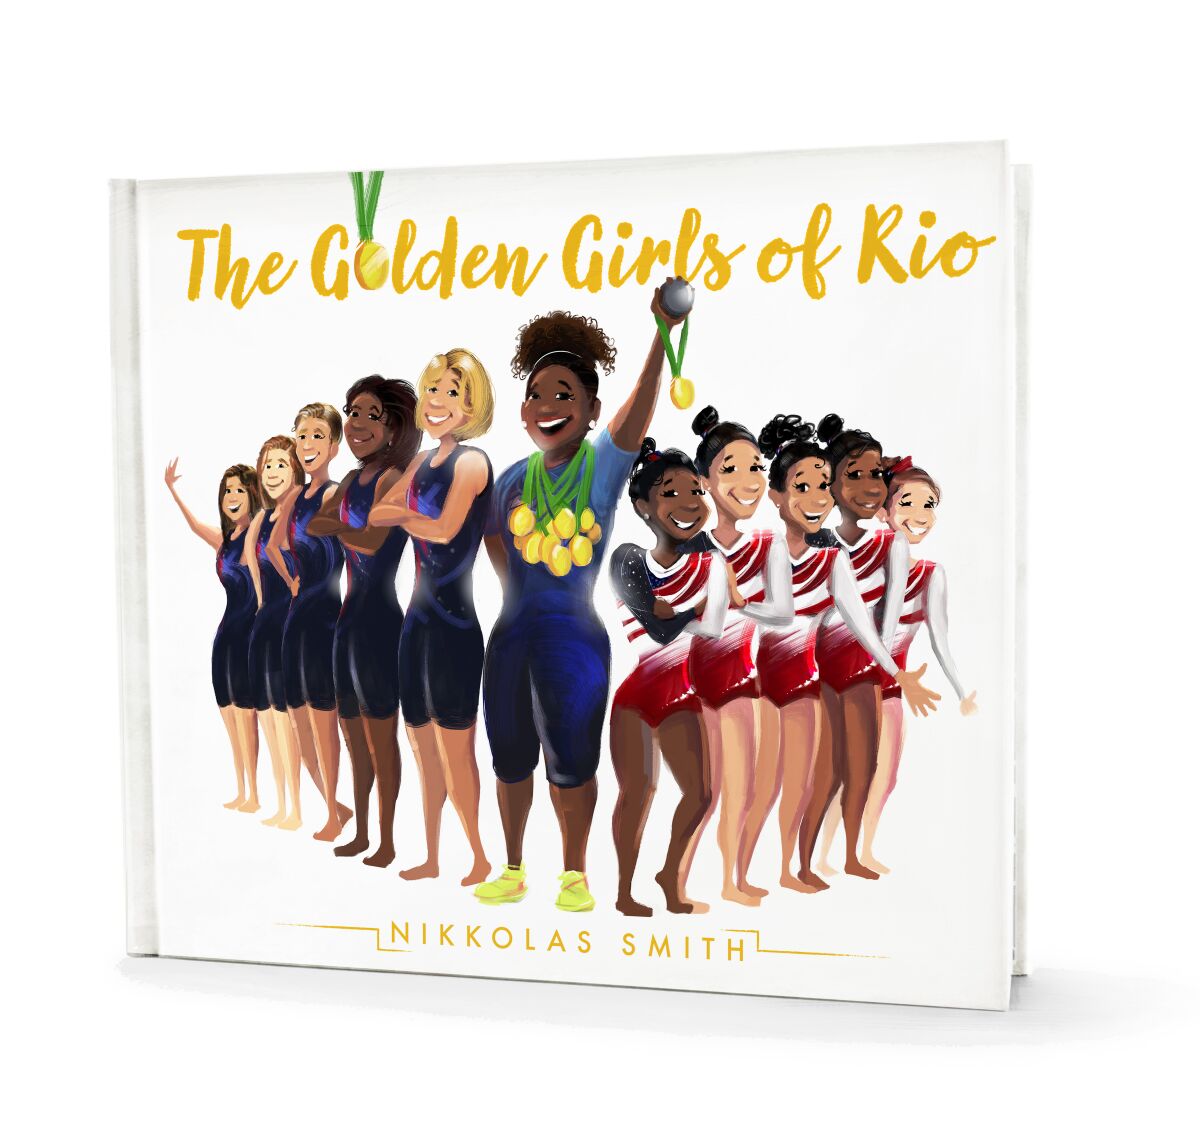 "The Golden Girls of Rio" is Nikkolas Smith's first children's book.